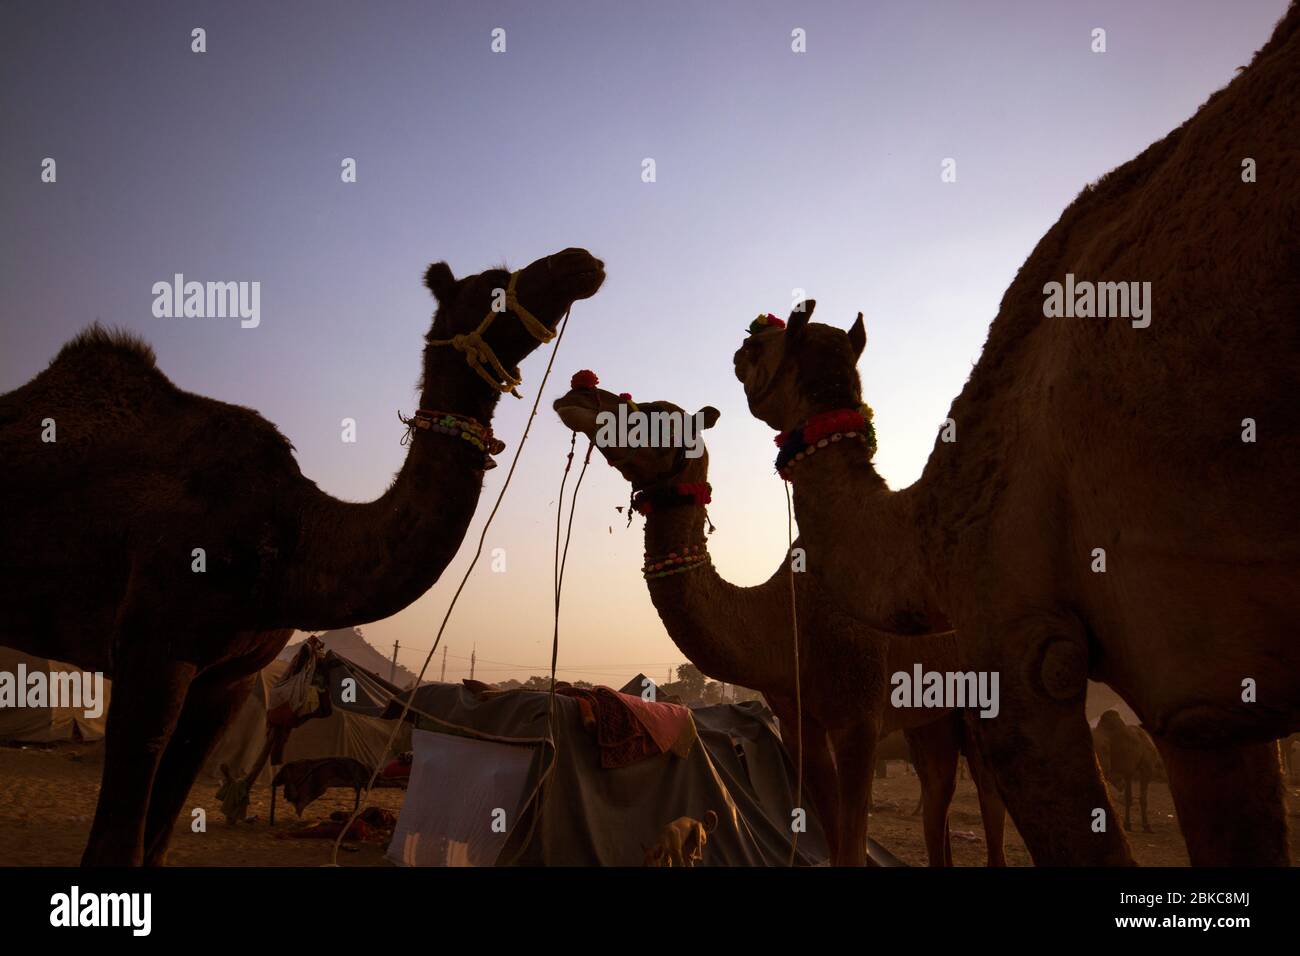 silhouette camel portrait at pushkar Stock Photo